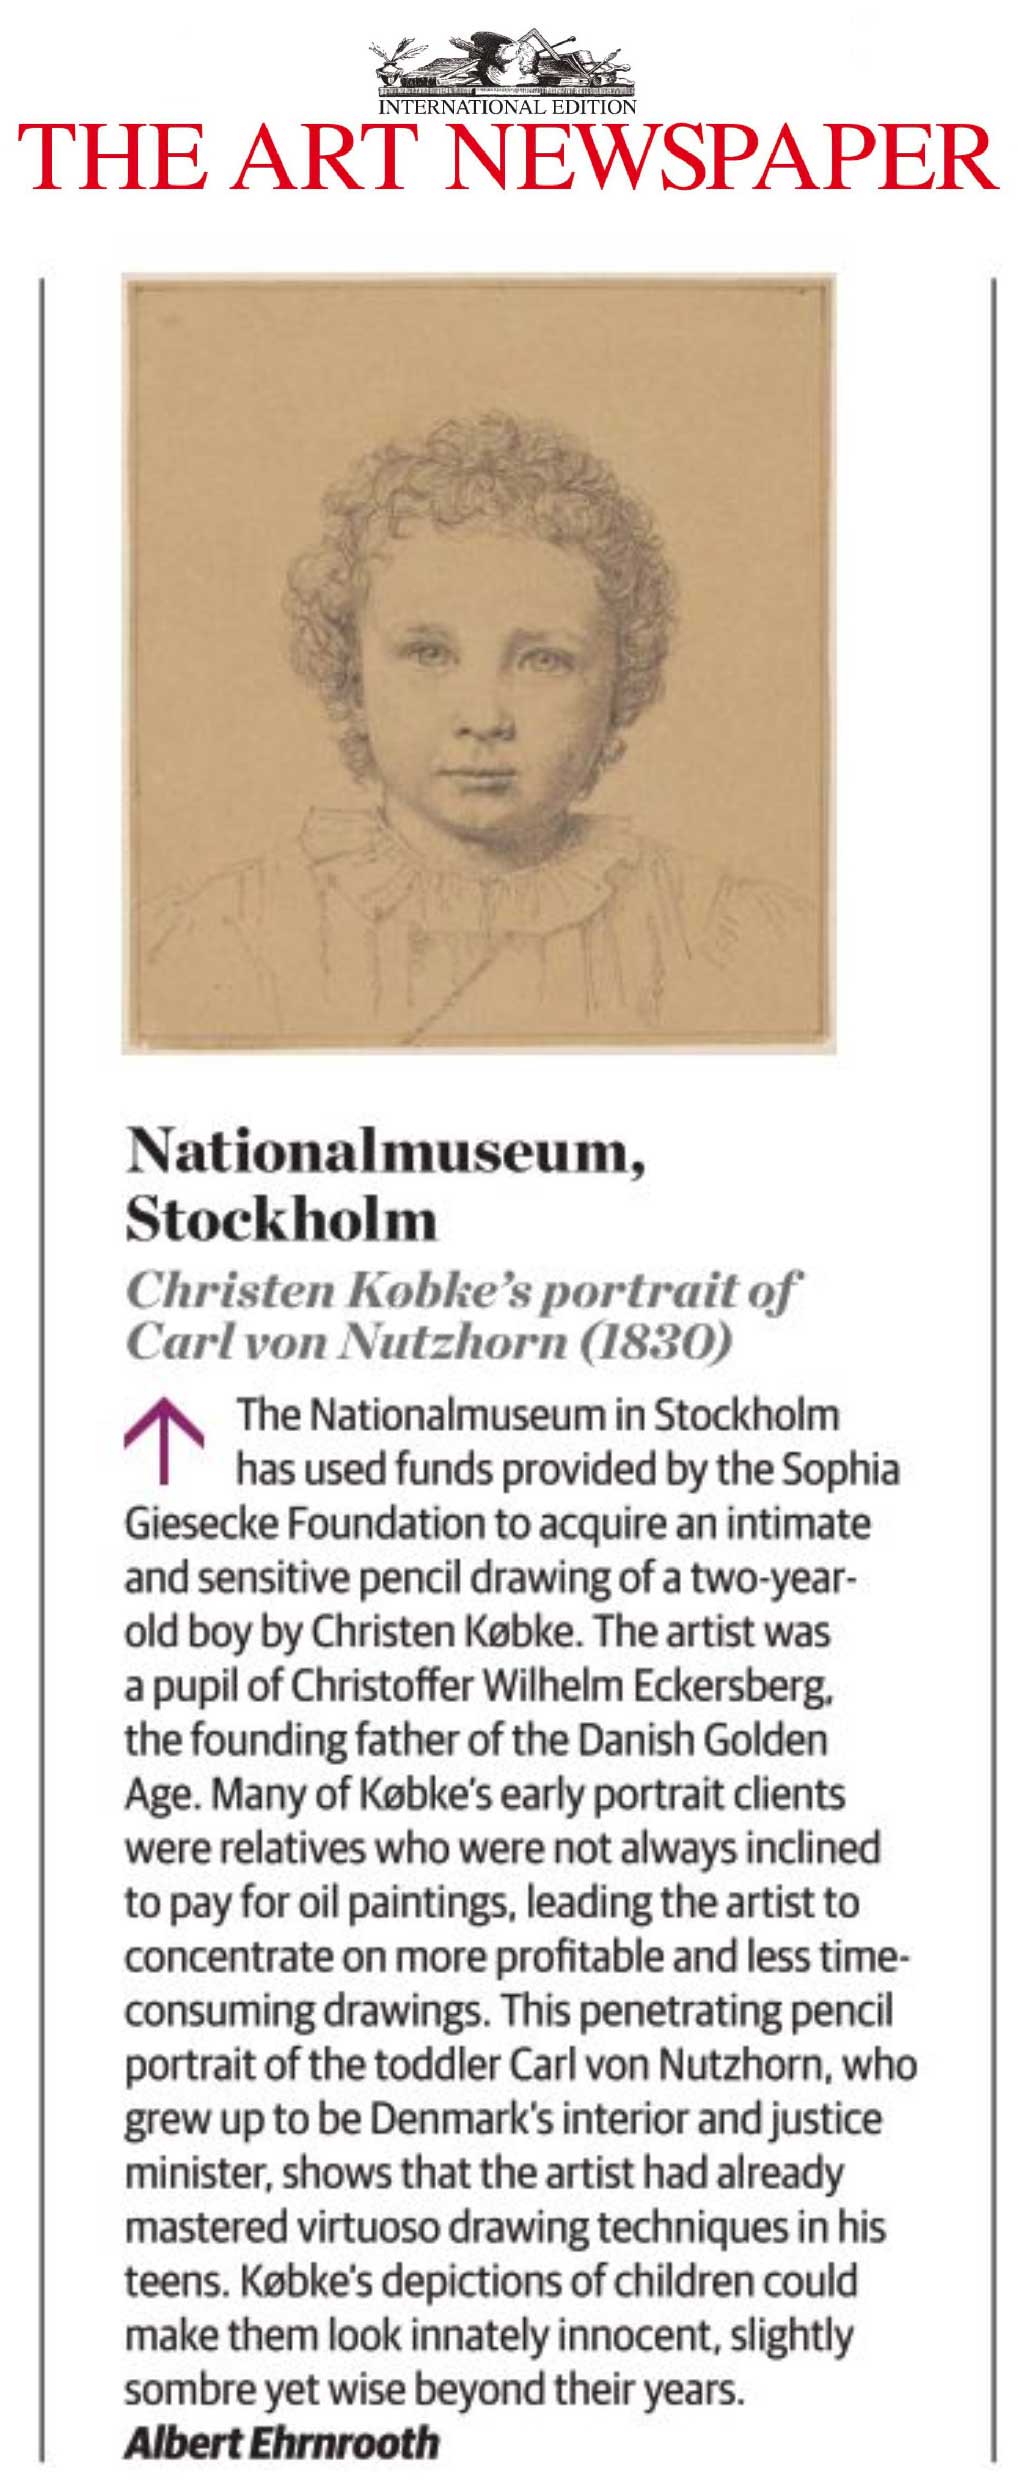 The Art Newspaper, Nationalmuseum Stockholm, Christen Købke's portrait of Carl von Nutzhorn